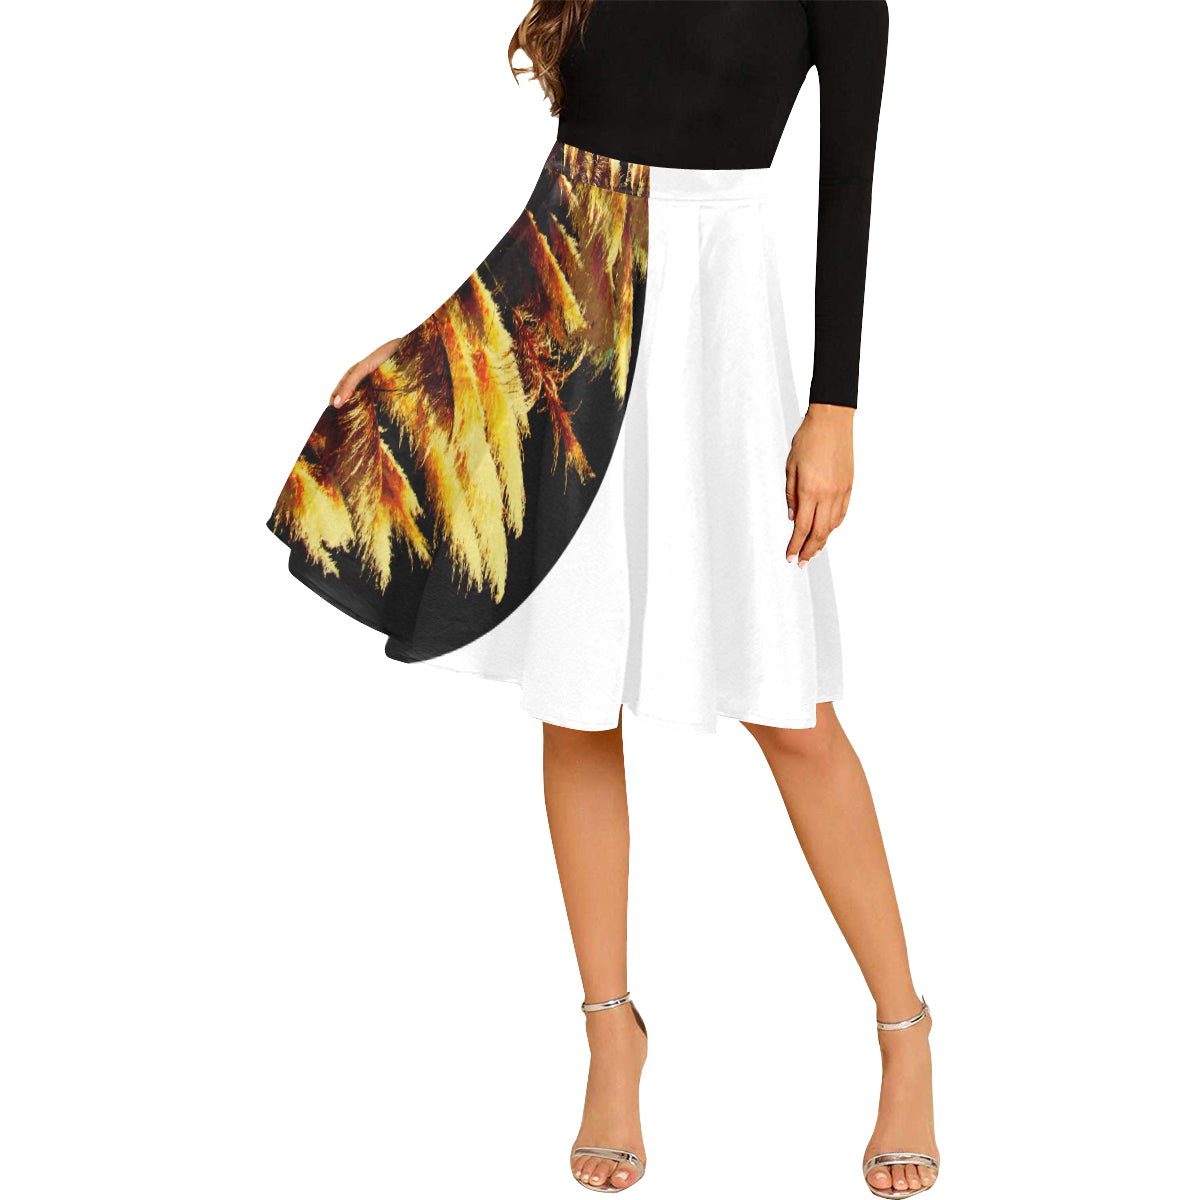 Kalent Zaiz Pleats Skirt Women's Midi Skirt (White) /Designed by Kalent Zaiz